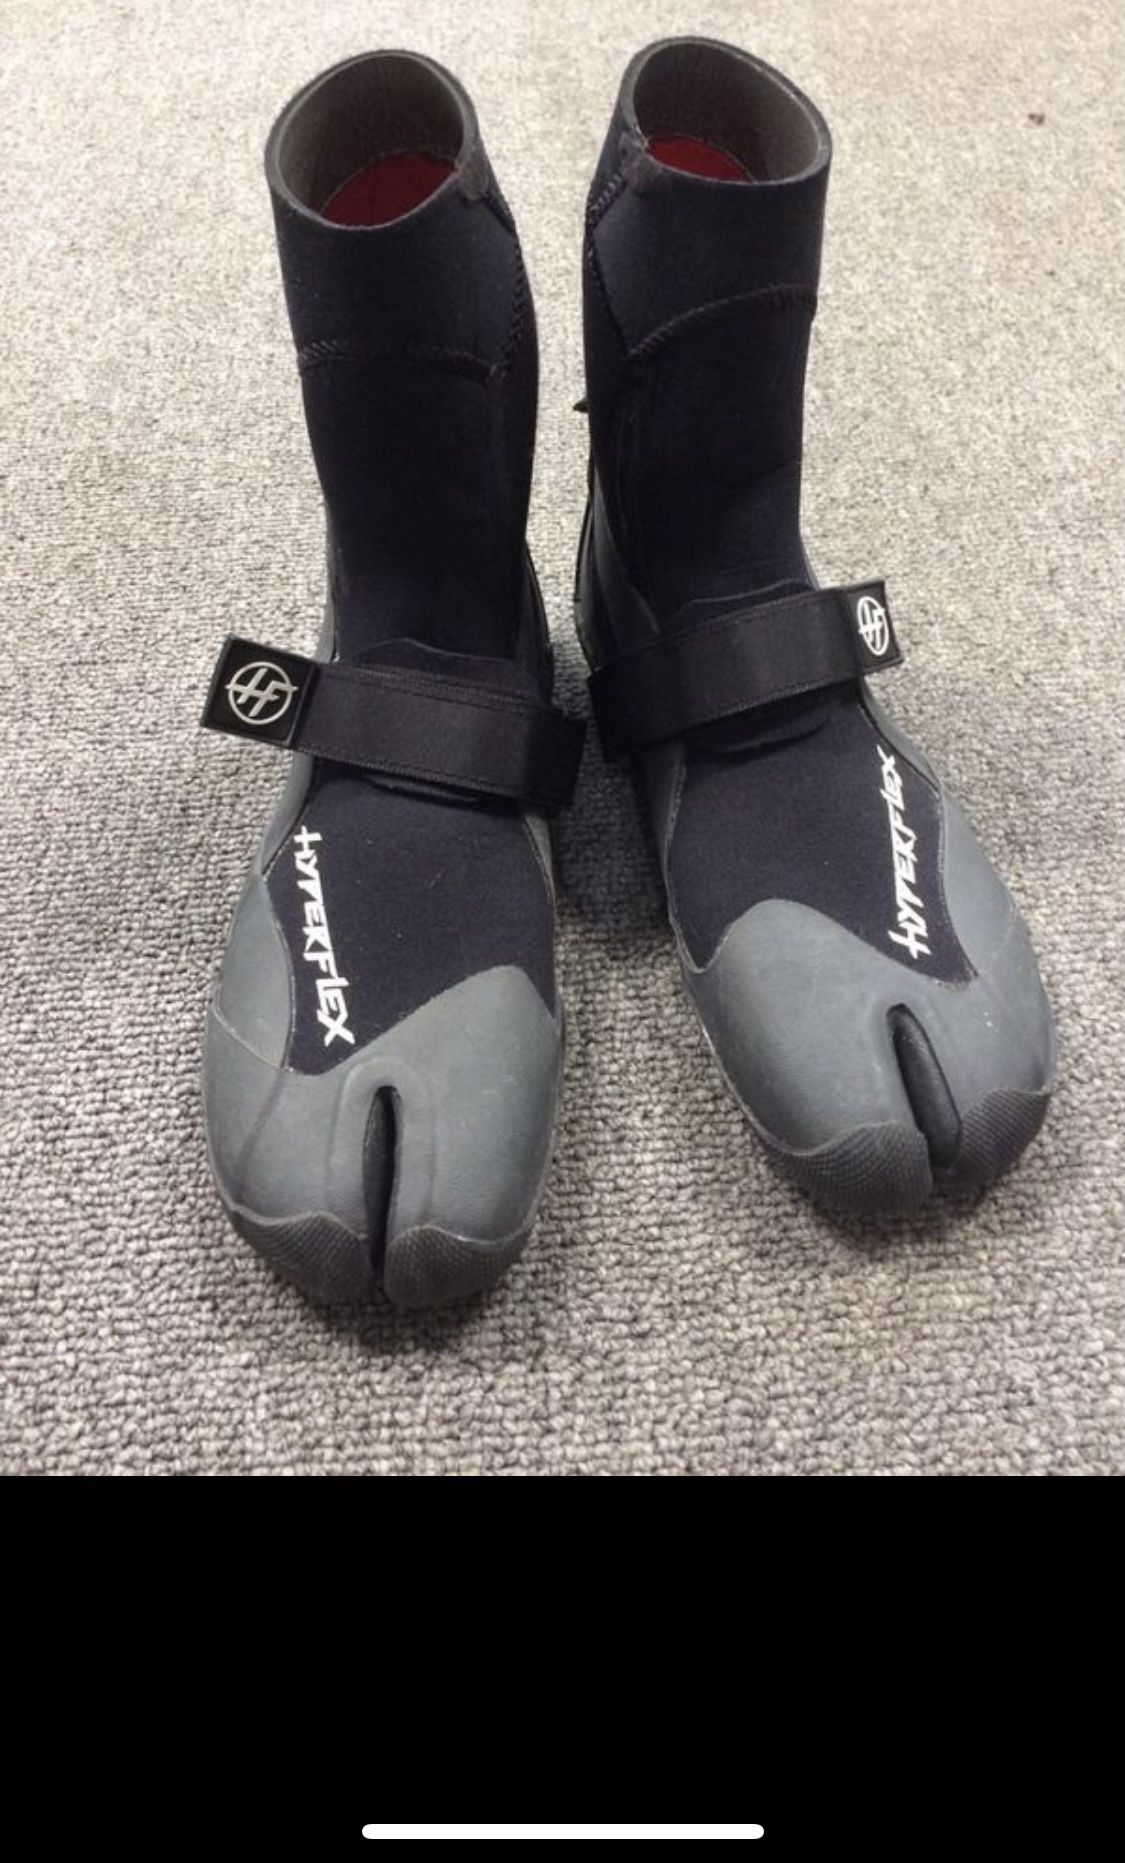 Wetsuit boots 3mm split toe Hyperflex men’s size 6